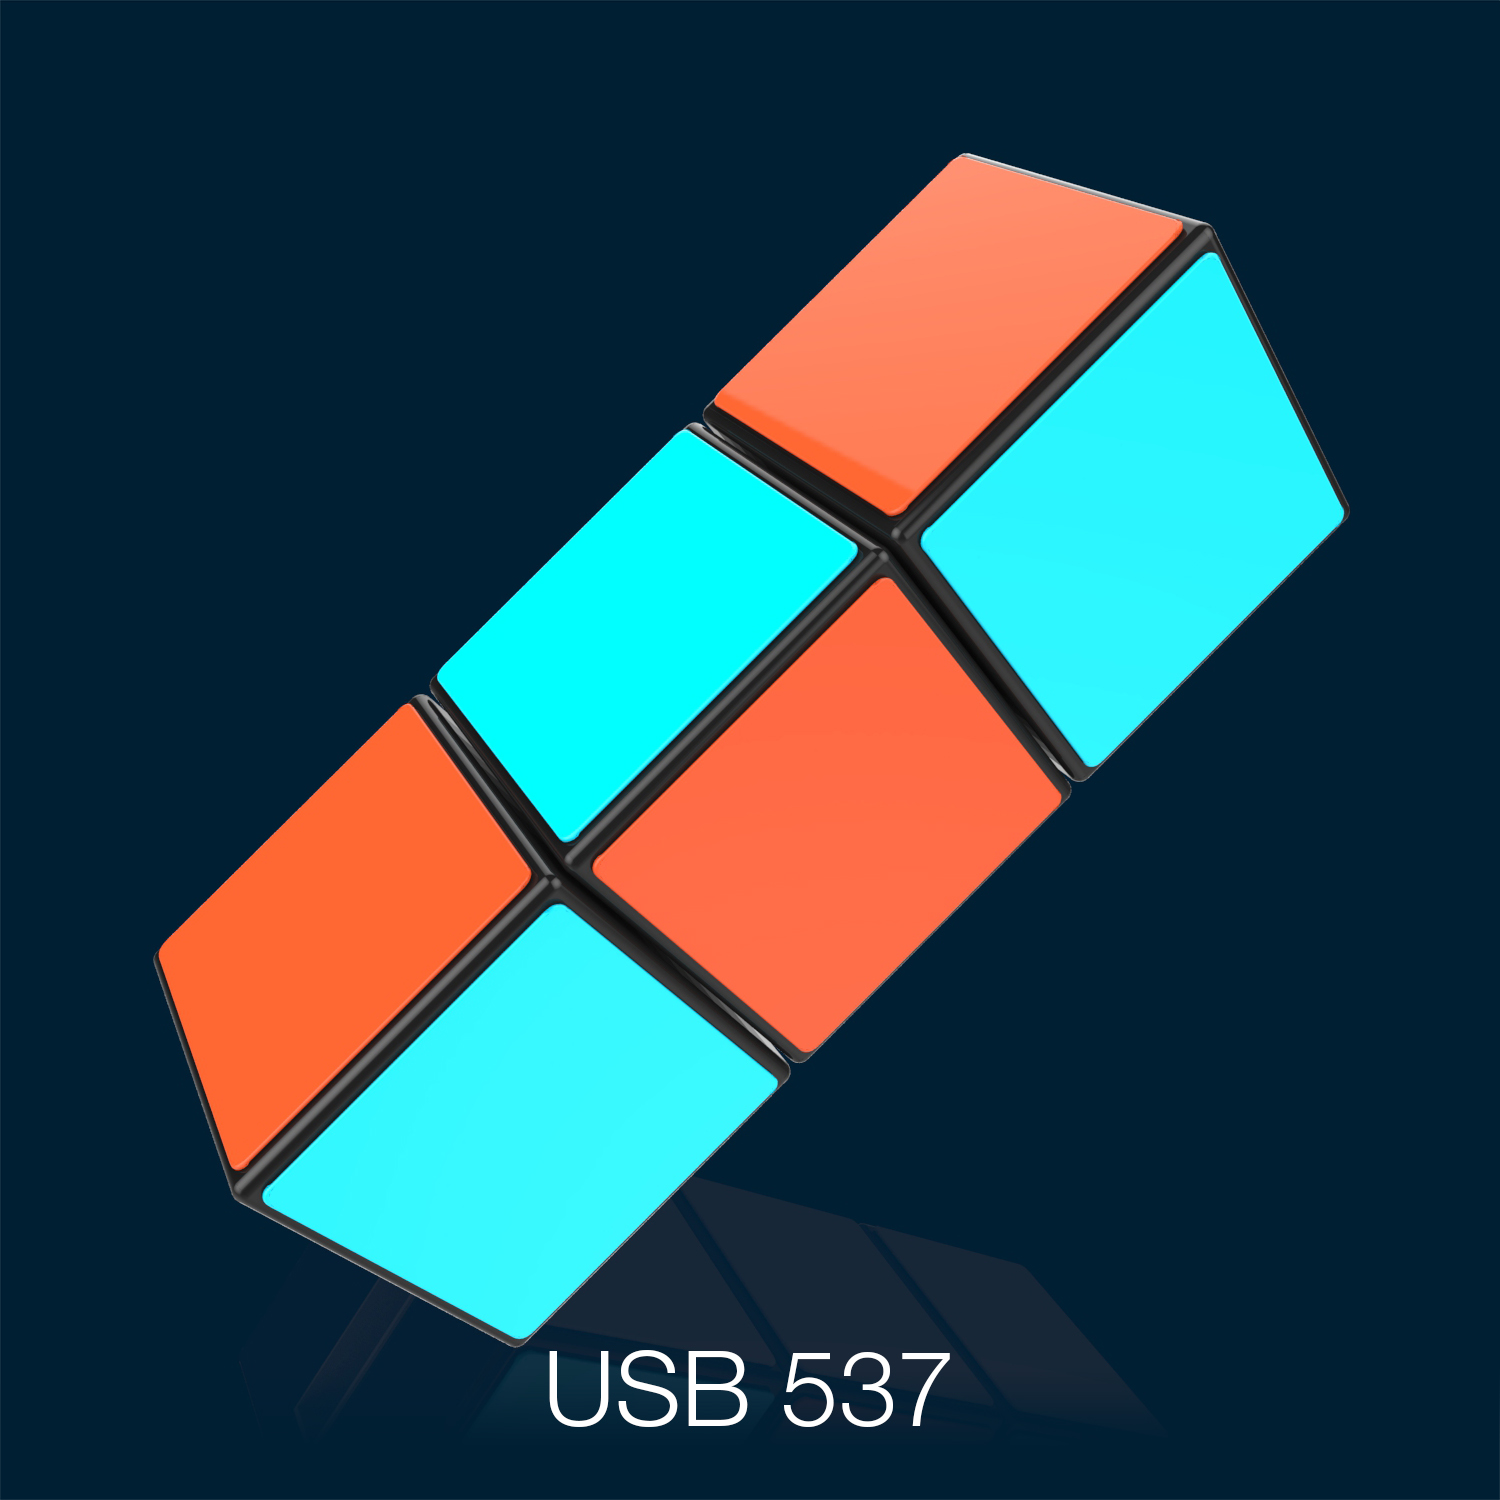 USB 537